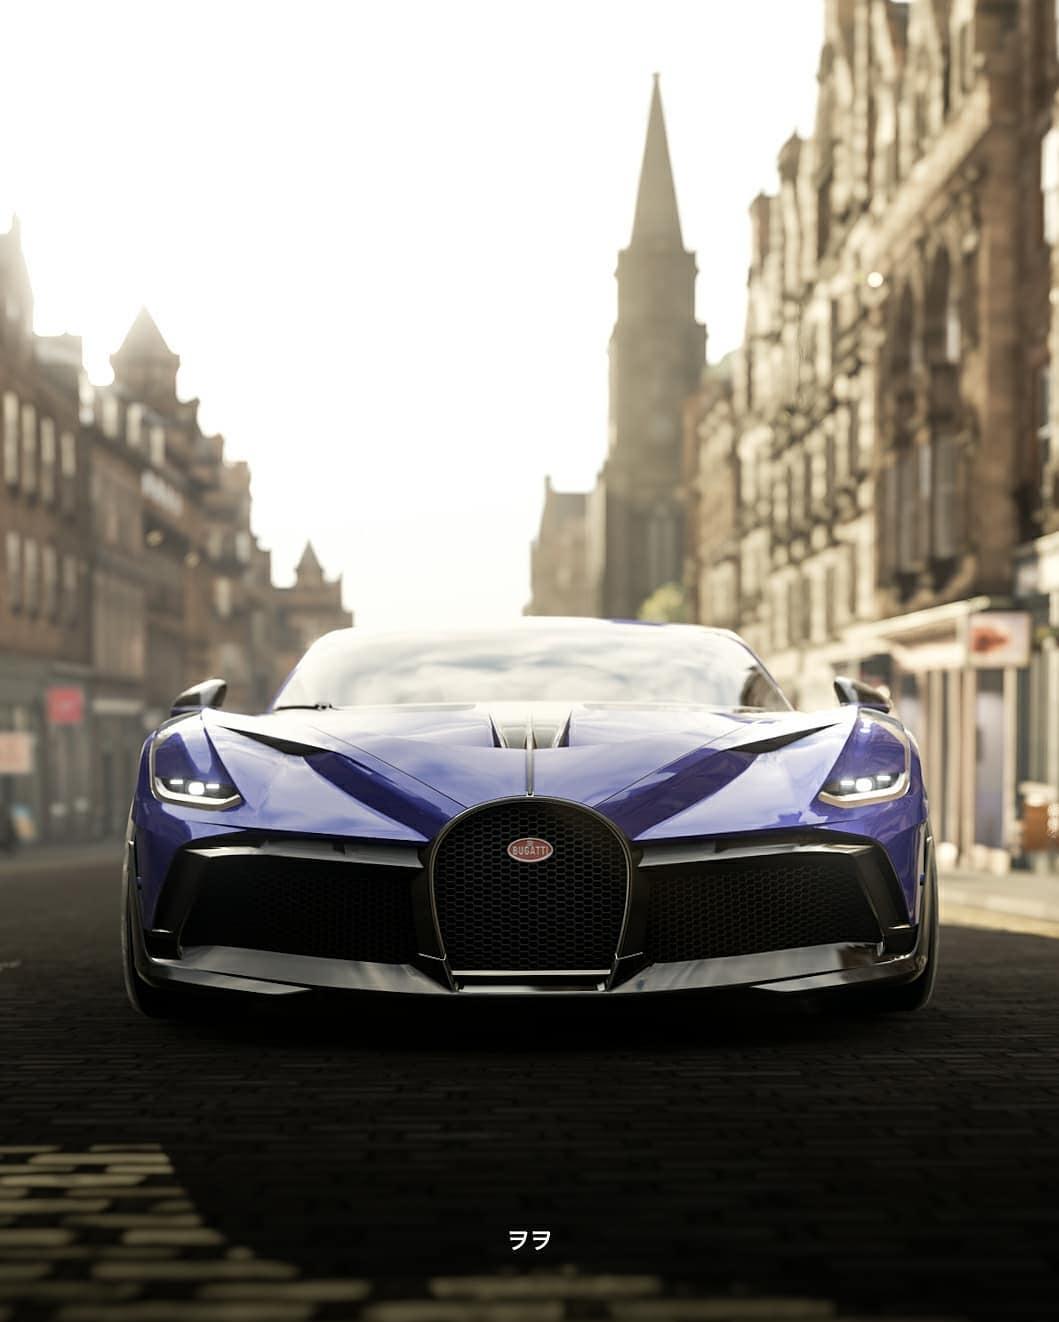 Bugatti Divo Looks Menacing In These Wallpaper Quality Game Shots